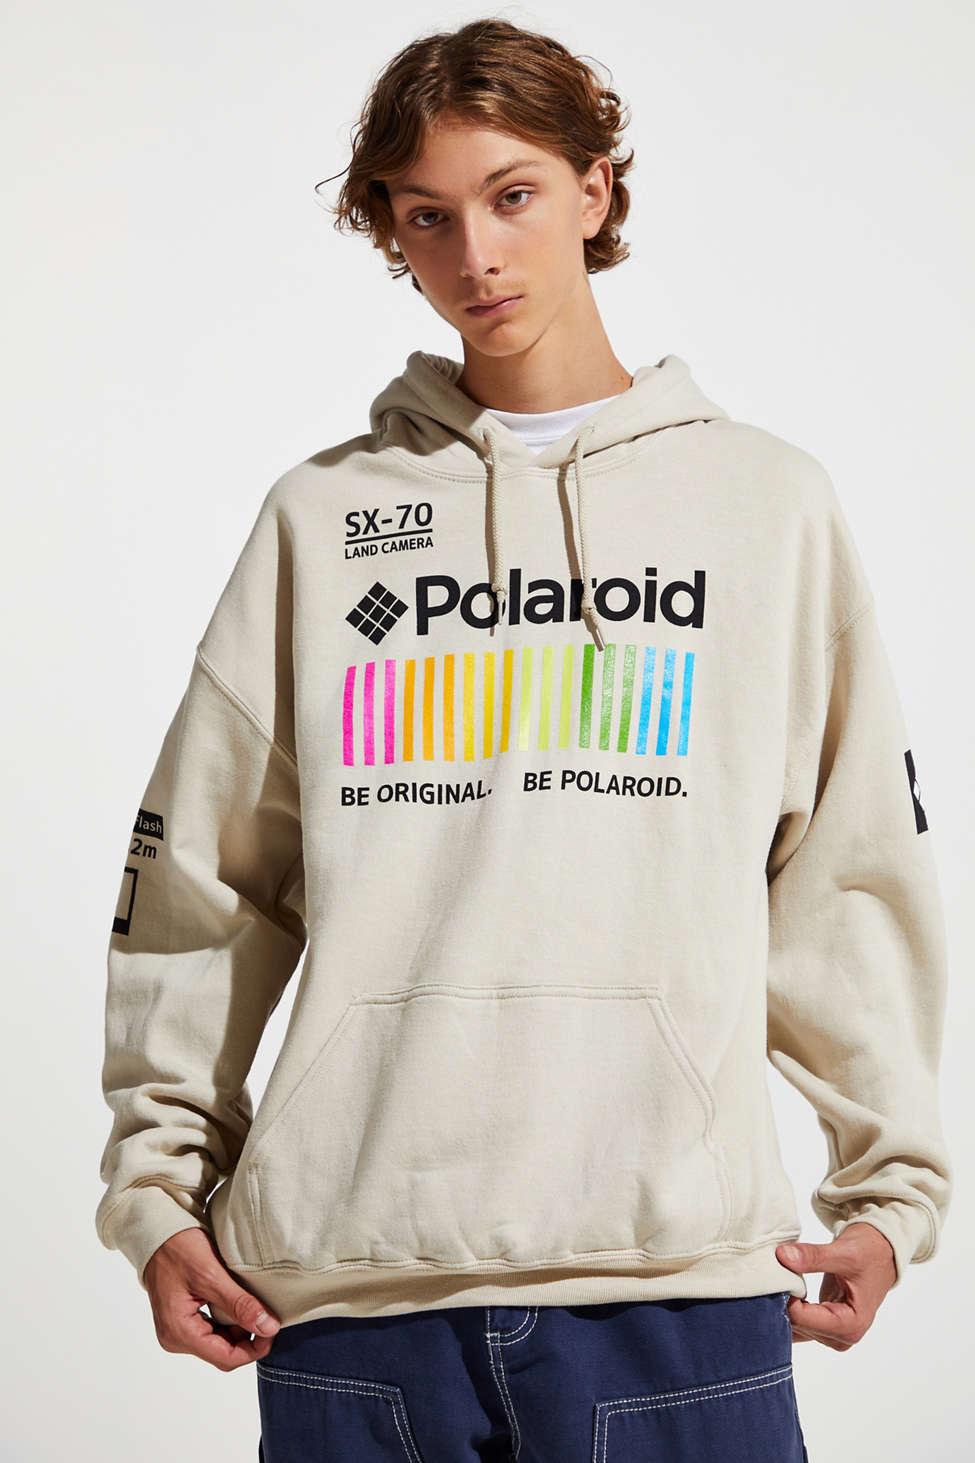 Urban Outfitters Polaroid Hoodie Sweatshirt in Beige (Gray) for Men - Lyst